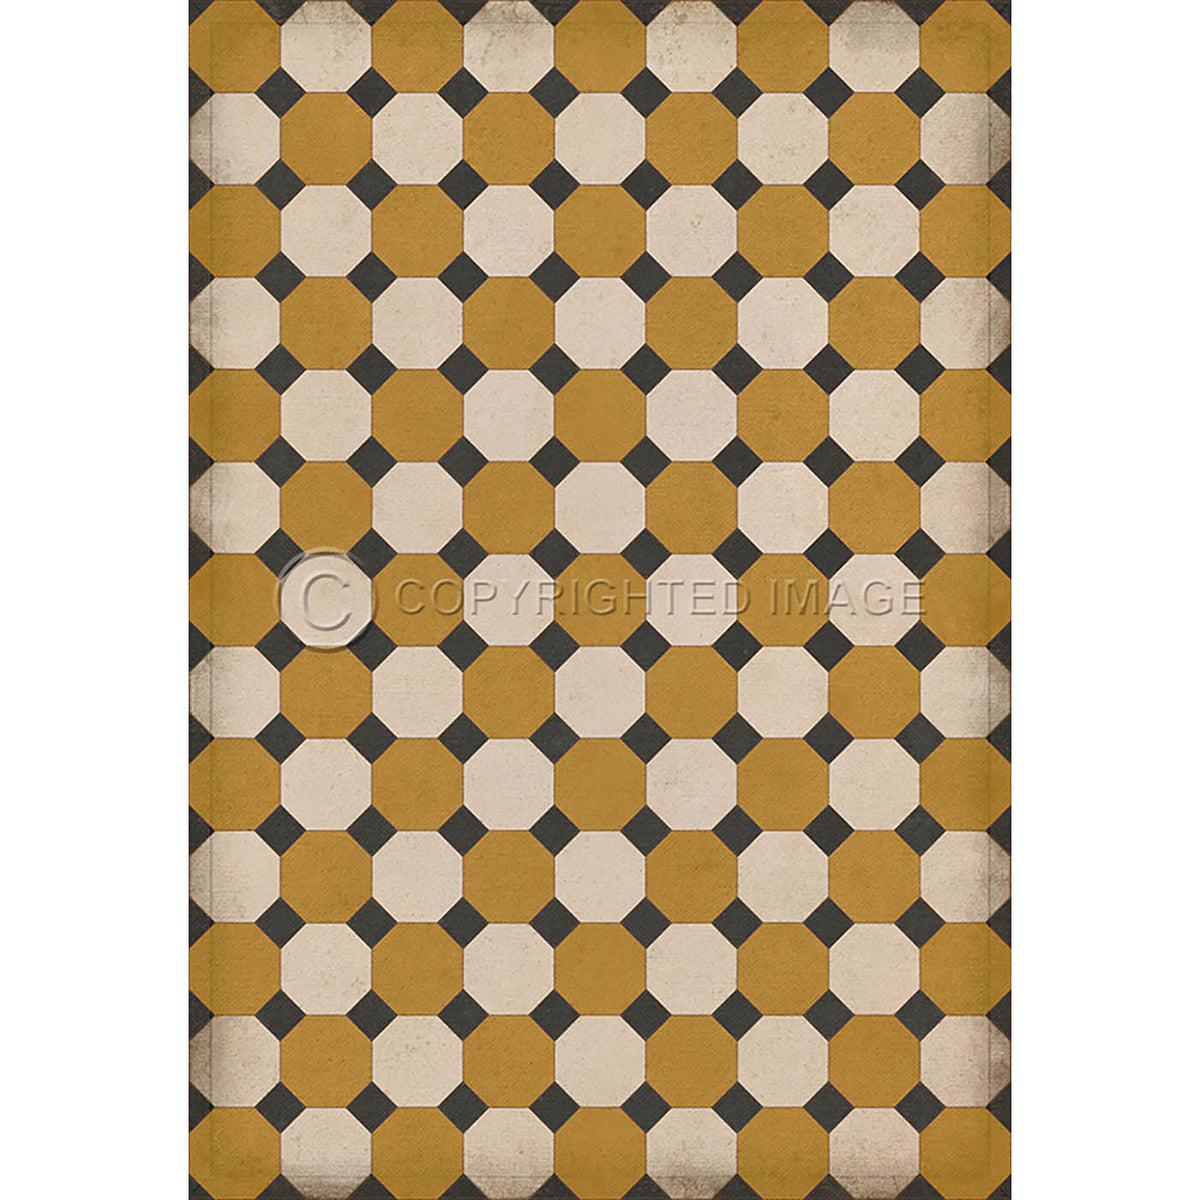 Octagons Jefferson 70x102